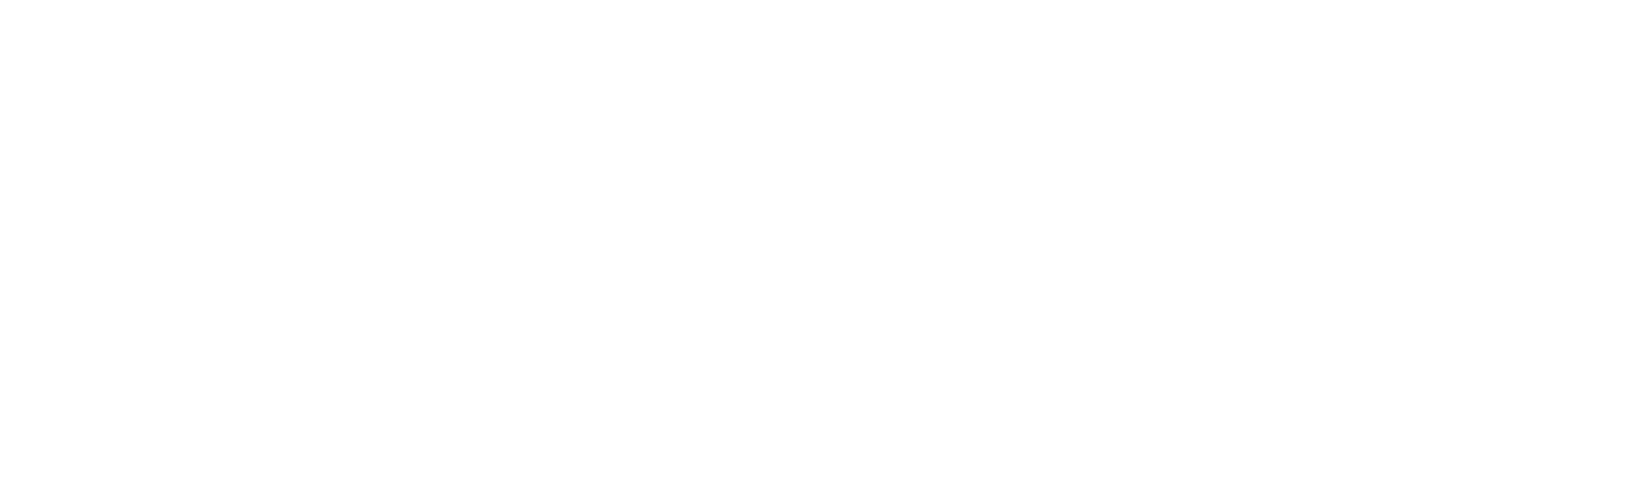 University of Kentucy Logo and link to uky.edu homepage